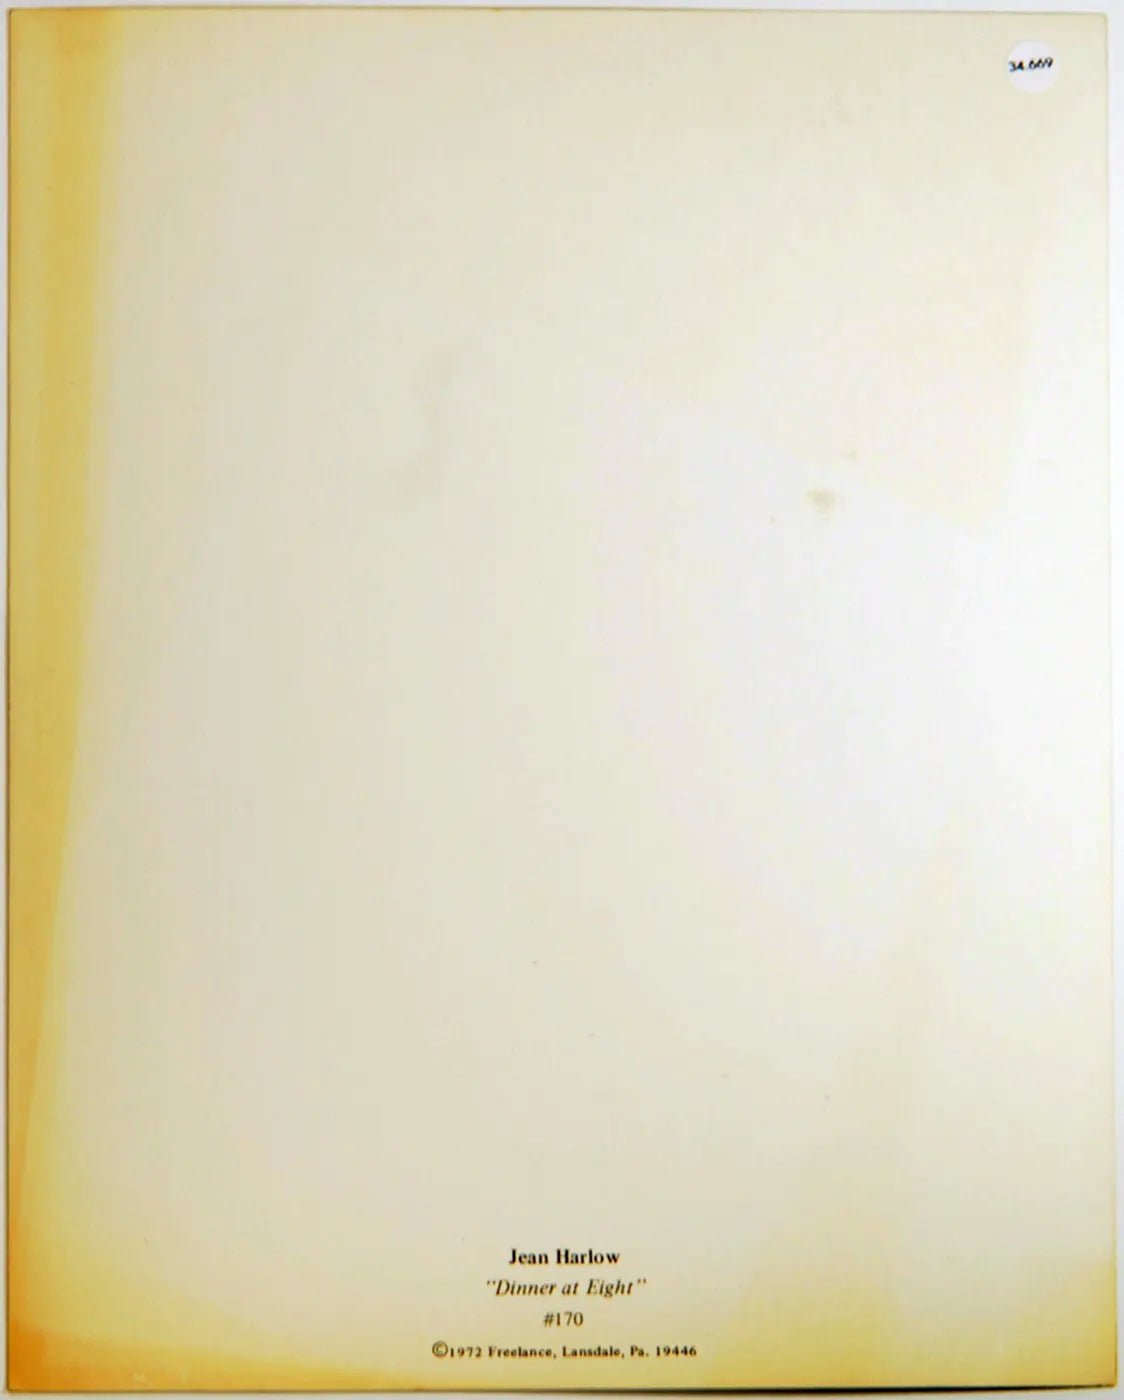 Jean Harlow Film Pranzo alle otto Ft 34669 - Stampa 20x25 cm - Farabola Stampa ai sali d'argento